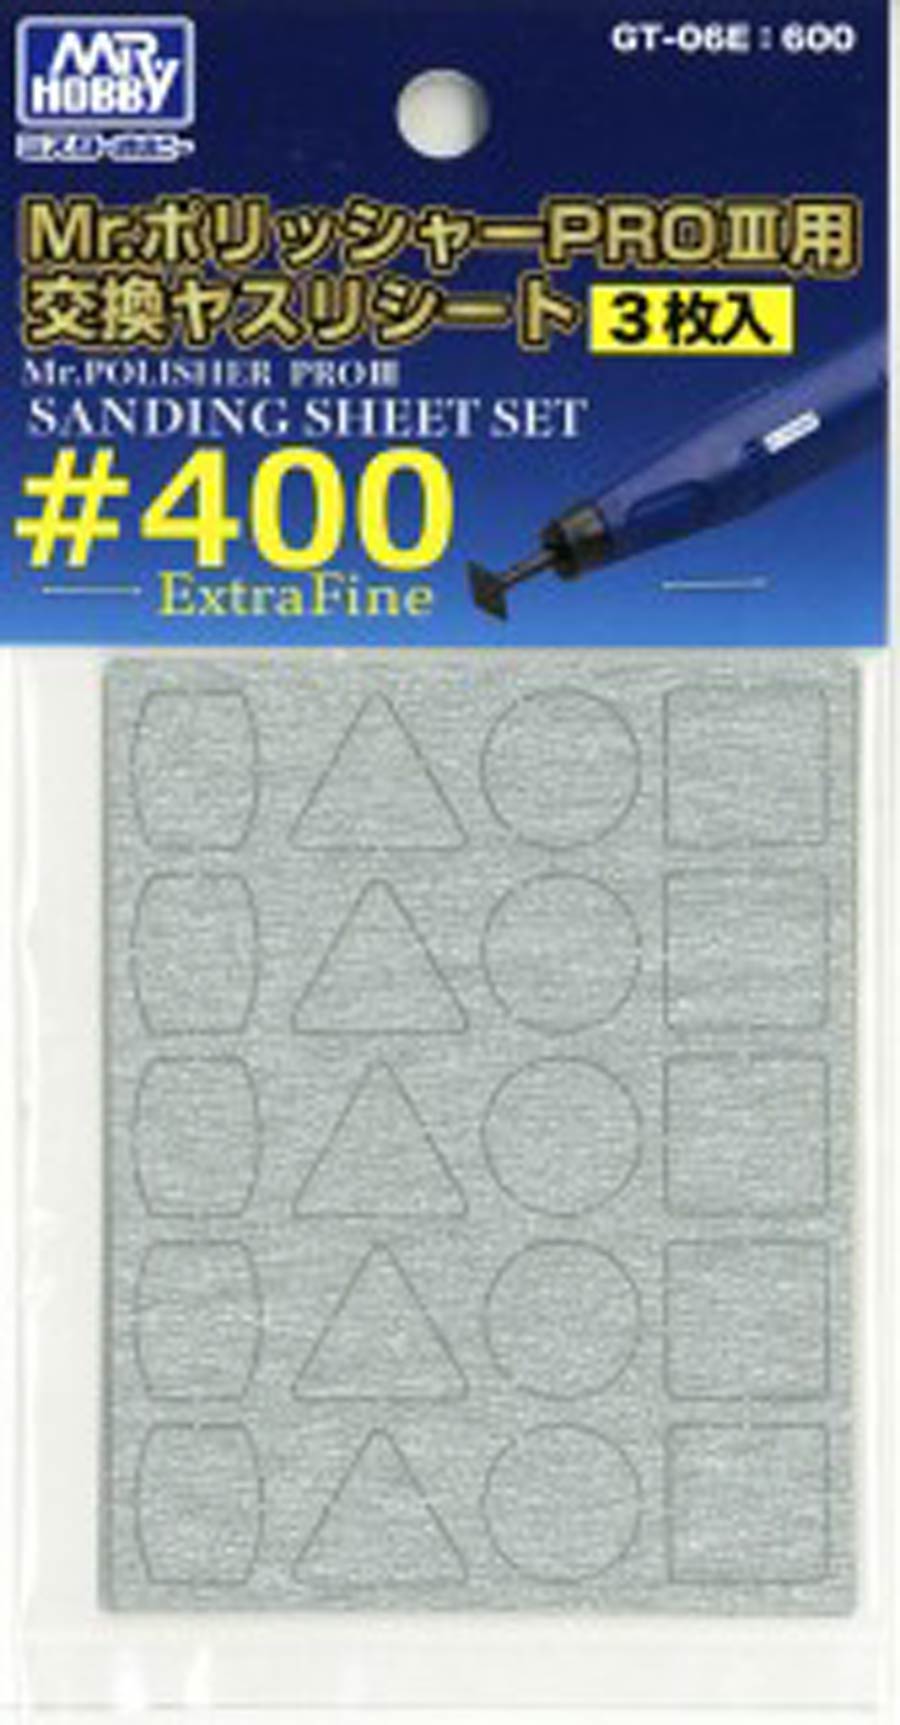 Mr. Hobby Tools - GT-06E #400 Extra Fine Sanding Sheet Set For GT06